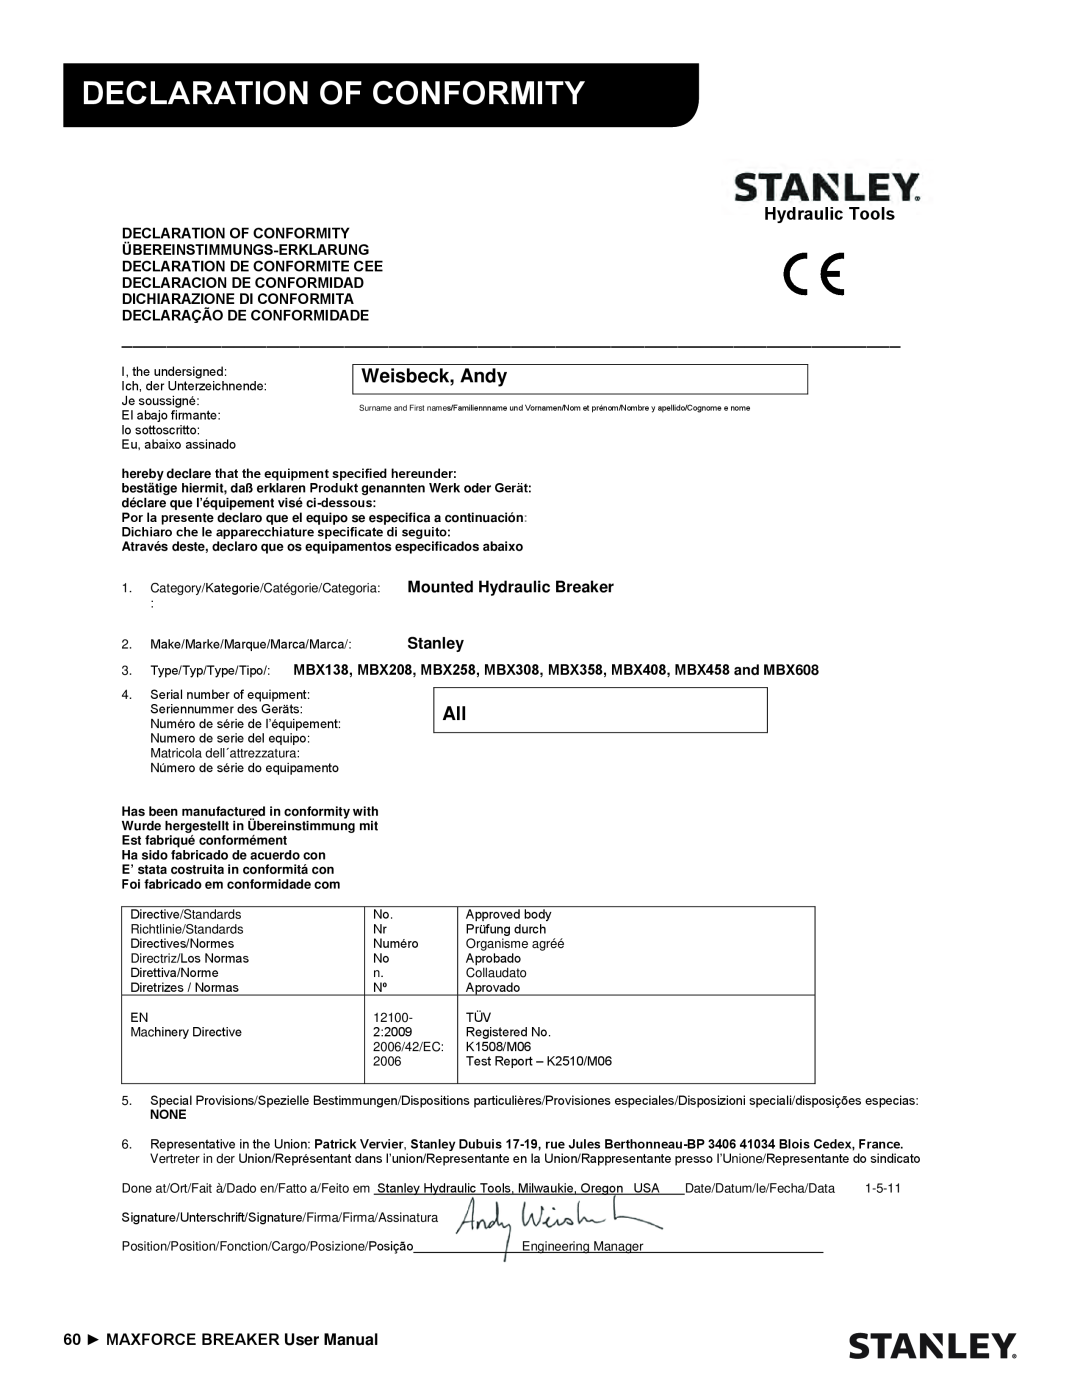 Stanley Black & Decker MBX138 thru MBX608 user manual Declaration Of Conformity, Weisbeck, Andy, Hydraulic Tools 